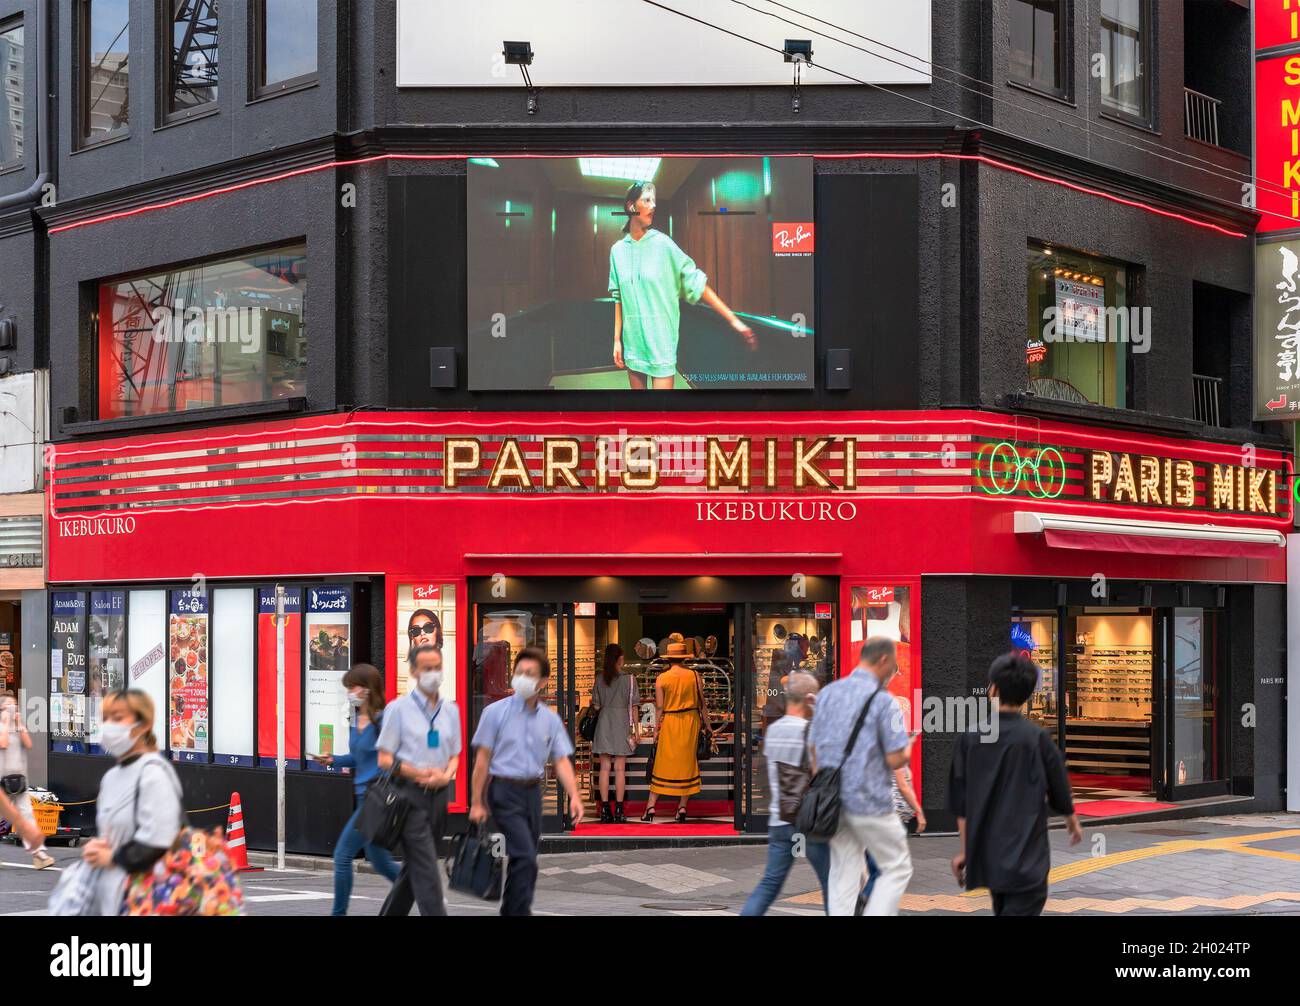 Paris miki hi-res stock photography and images - Alamy